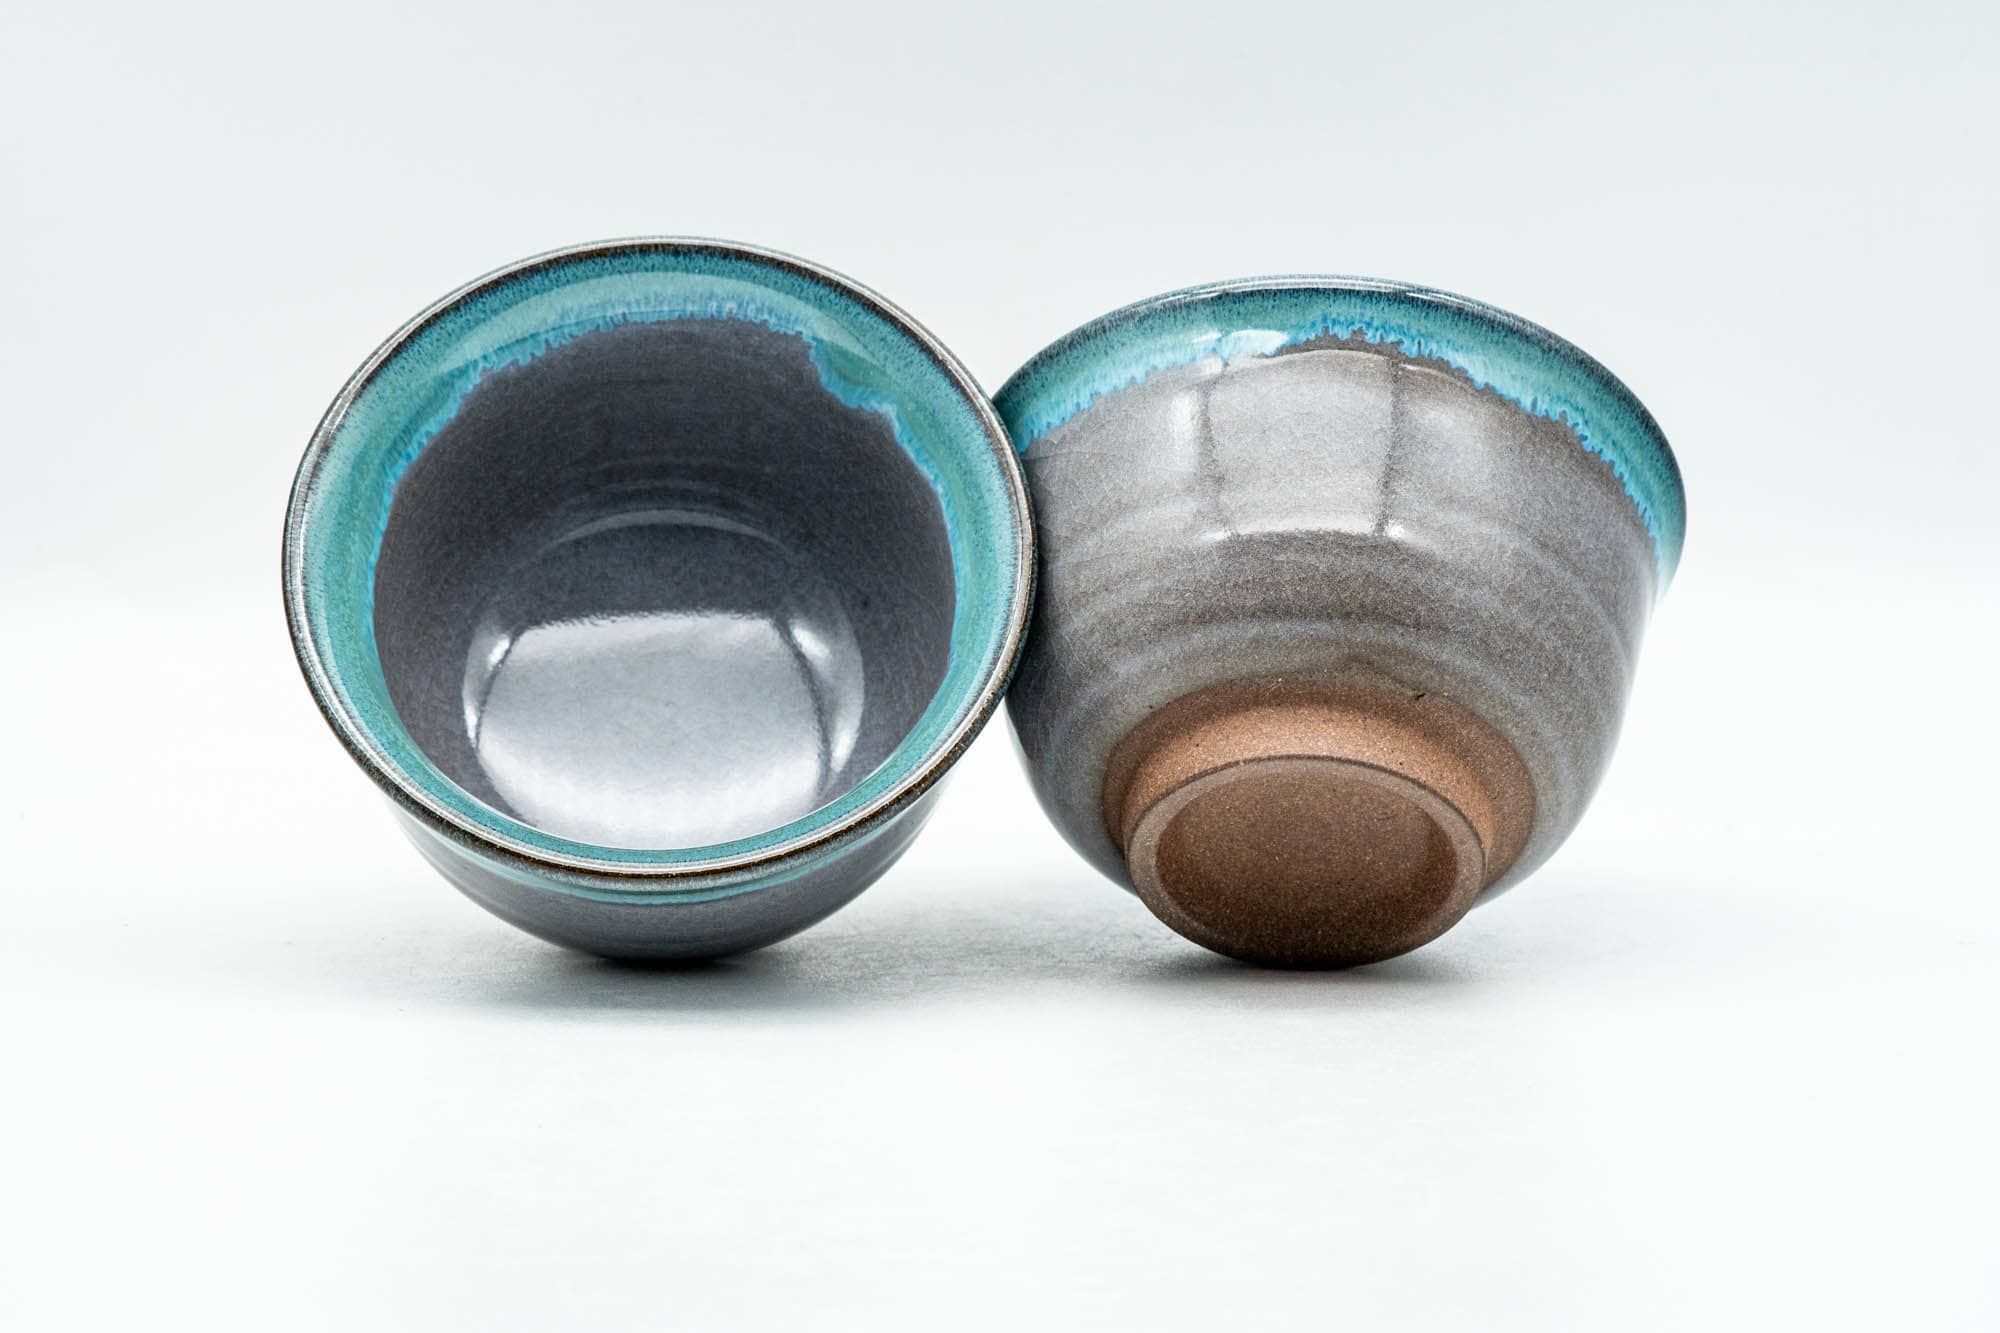 Japanese Teacups - Pair of Blue Turquoise Drip-Glazed Agano-yaki Yunomi - 100ml